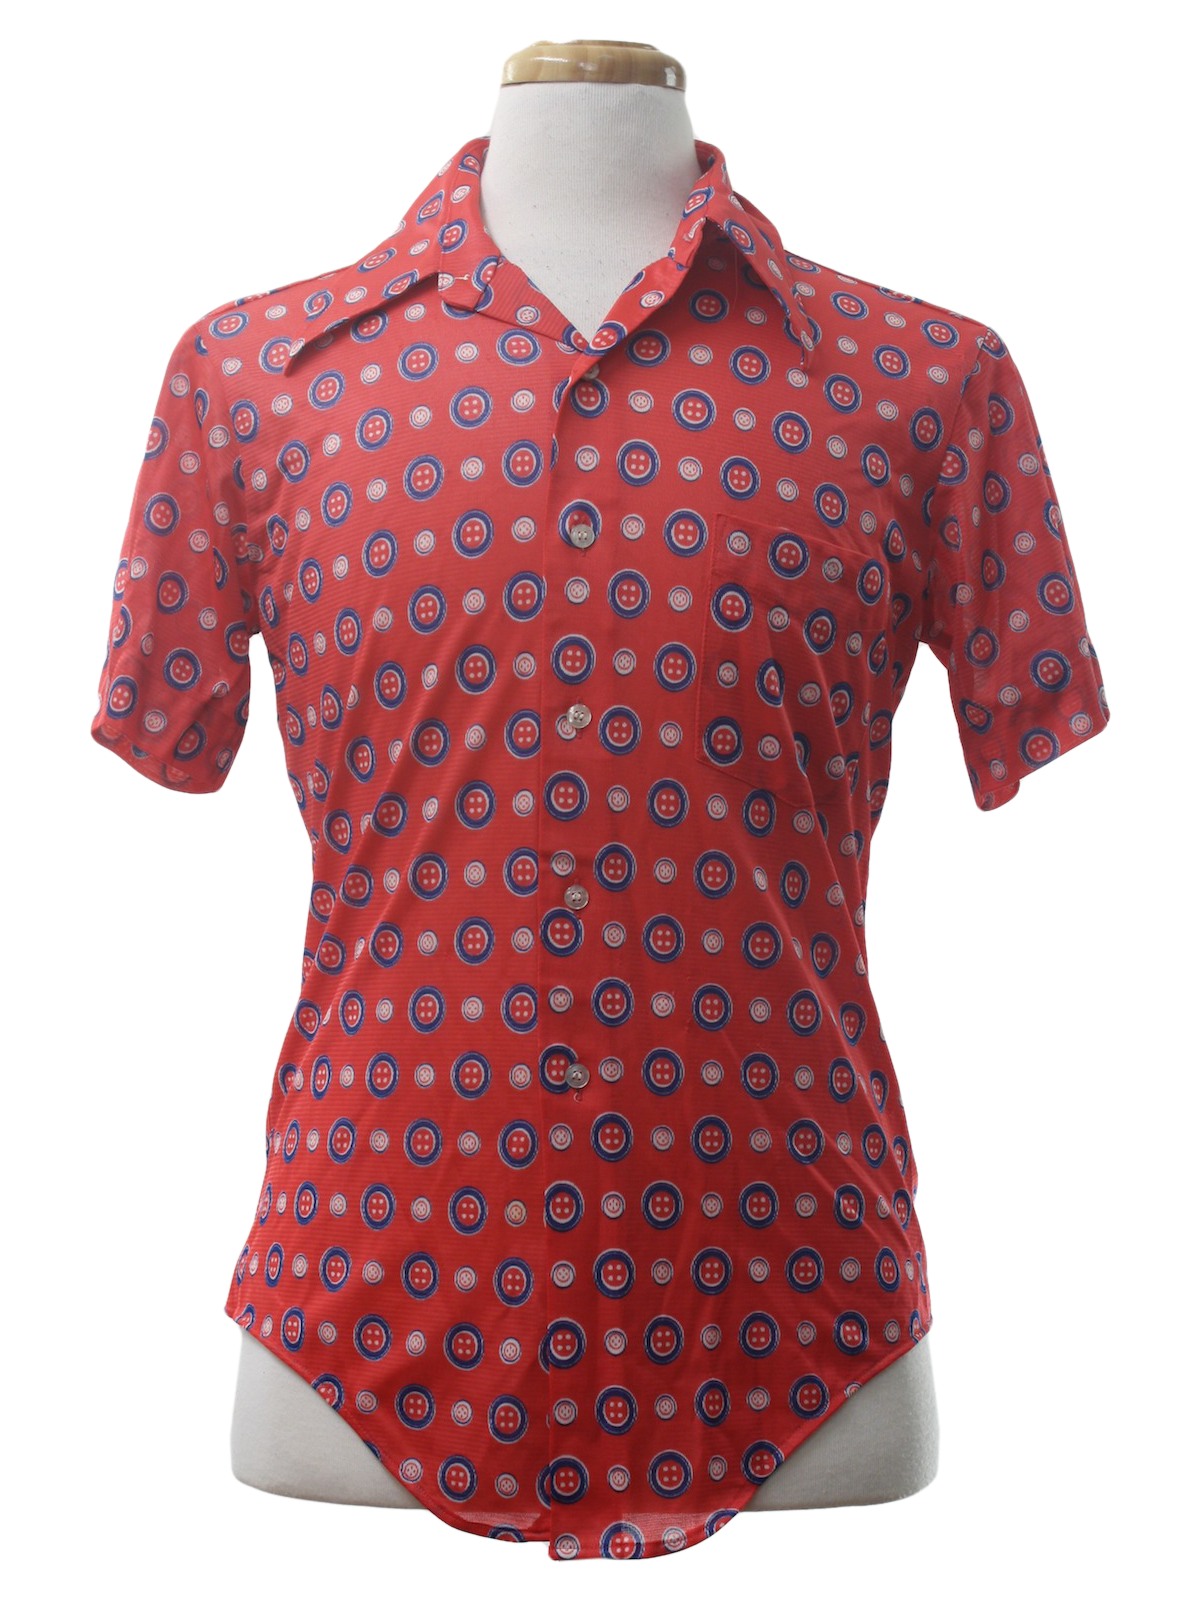 1970's Print Disco Shirt (Marlboro): 70s -Marlboro- Mens red background